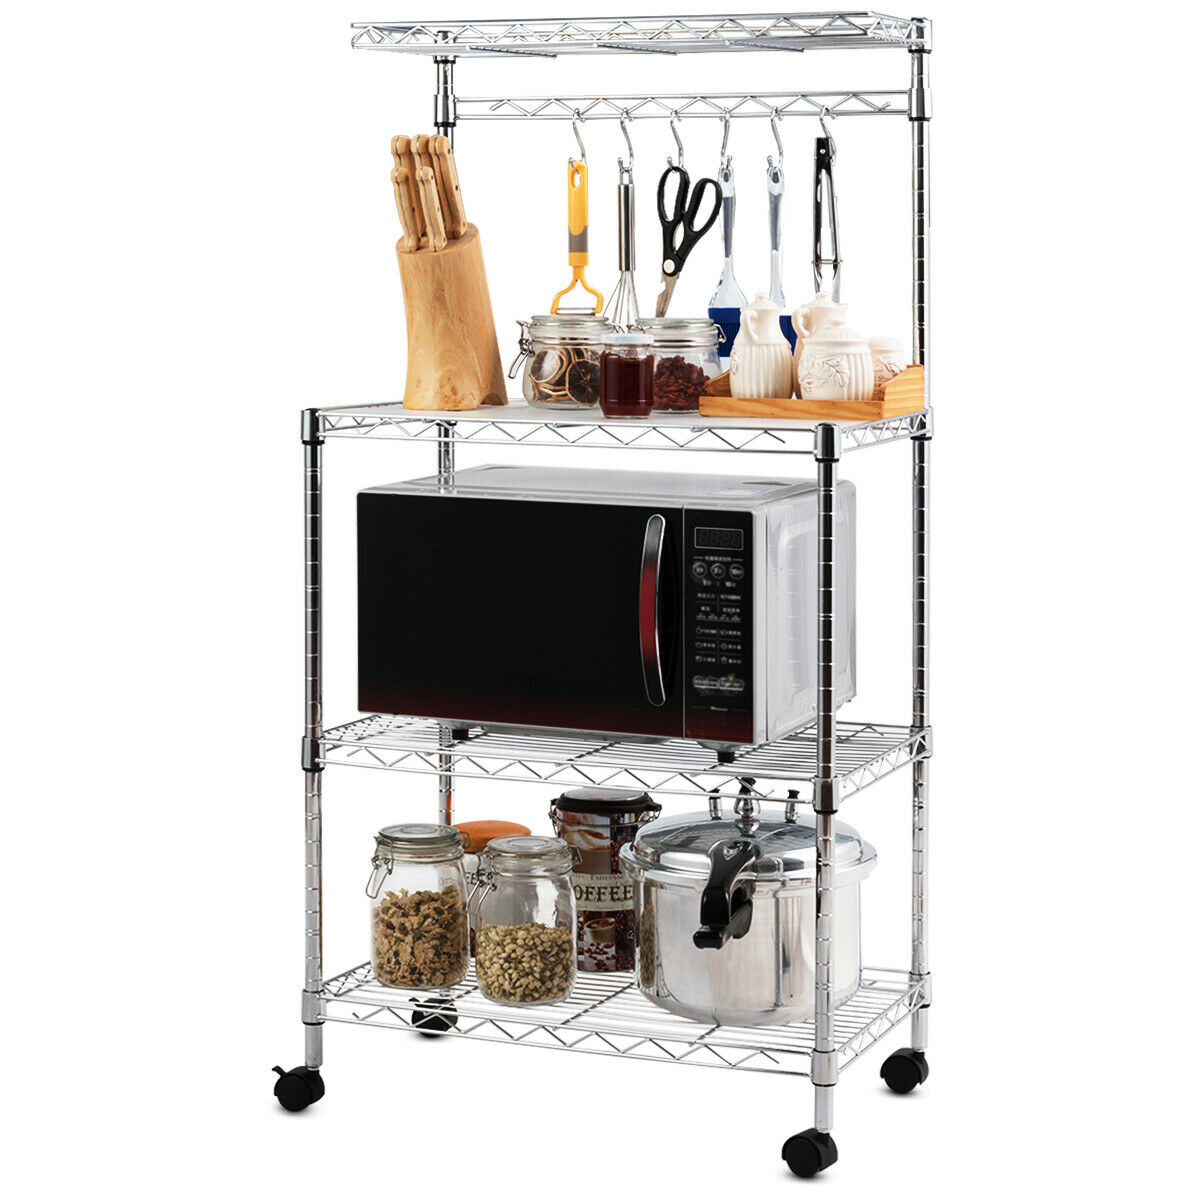 3-Tier Kitchen Baker's Rack Microwave Oven Stand Storage Cart Workstation Shelf